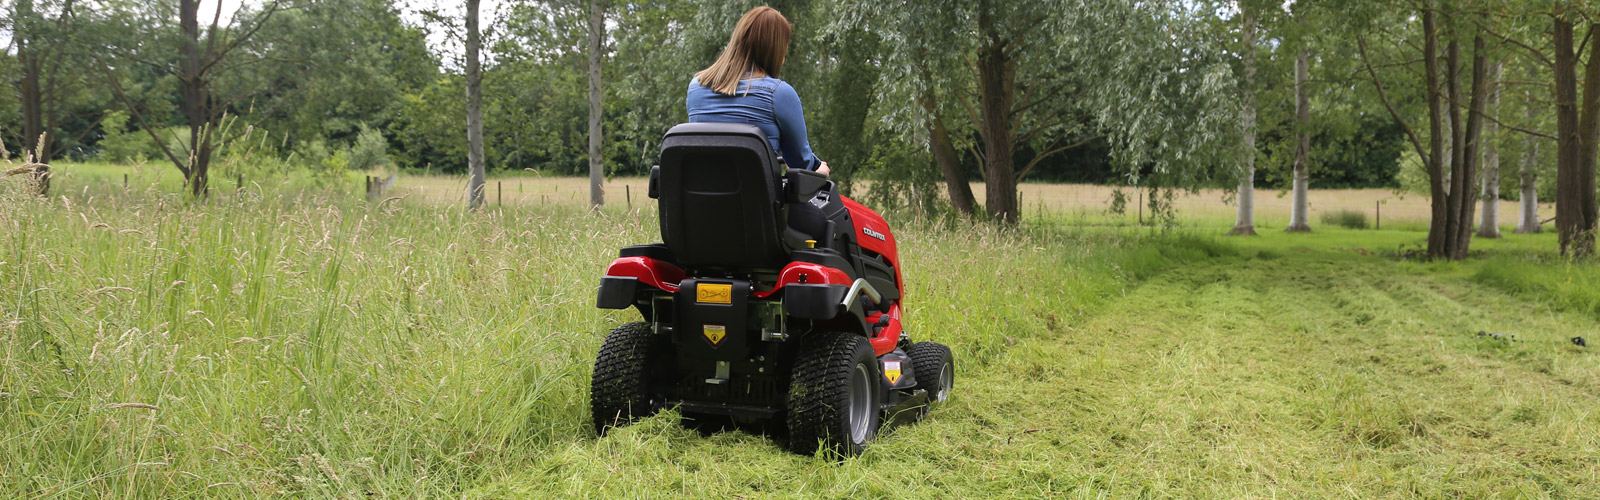 Countax B Series 4WD garden tractor ride mower with HGM cutter deck cutting tall grass